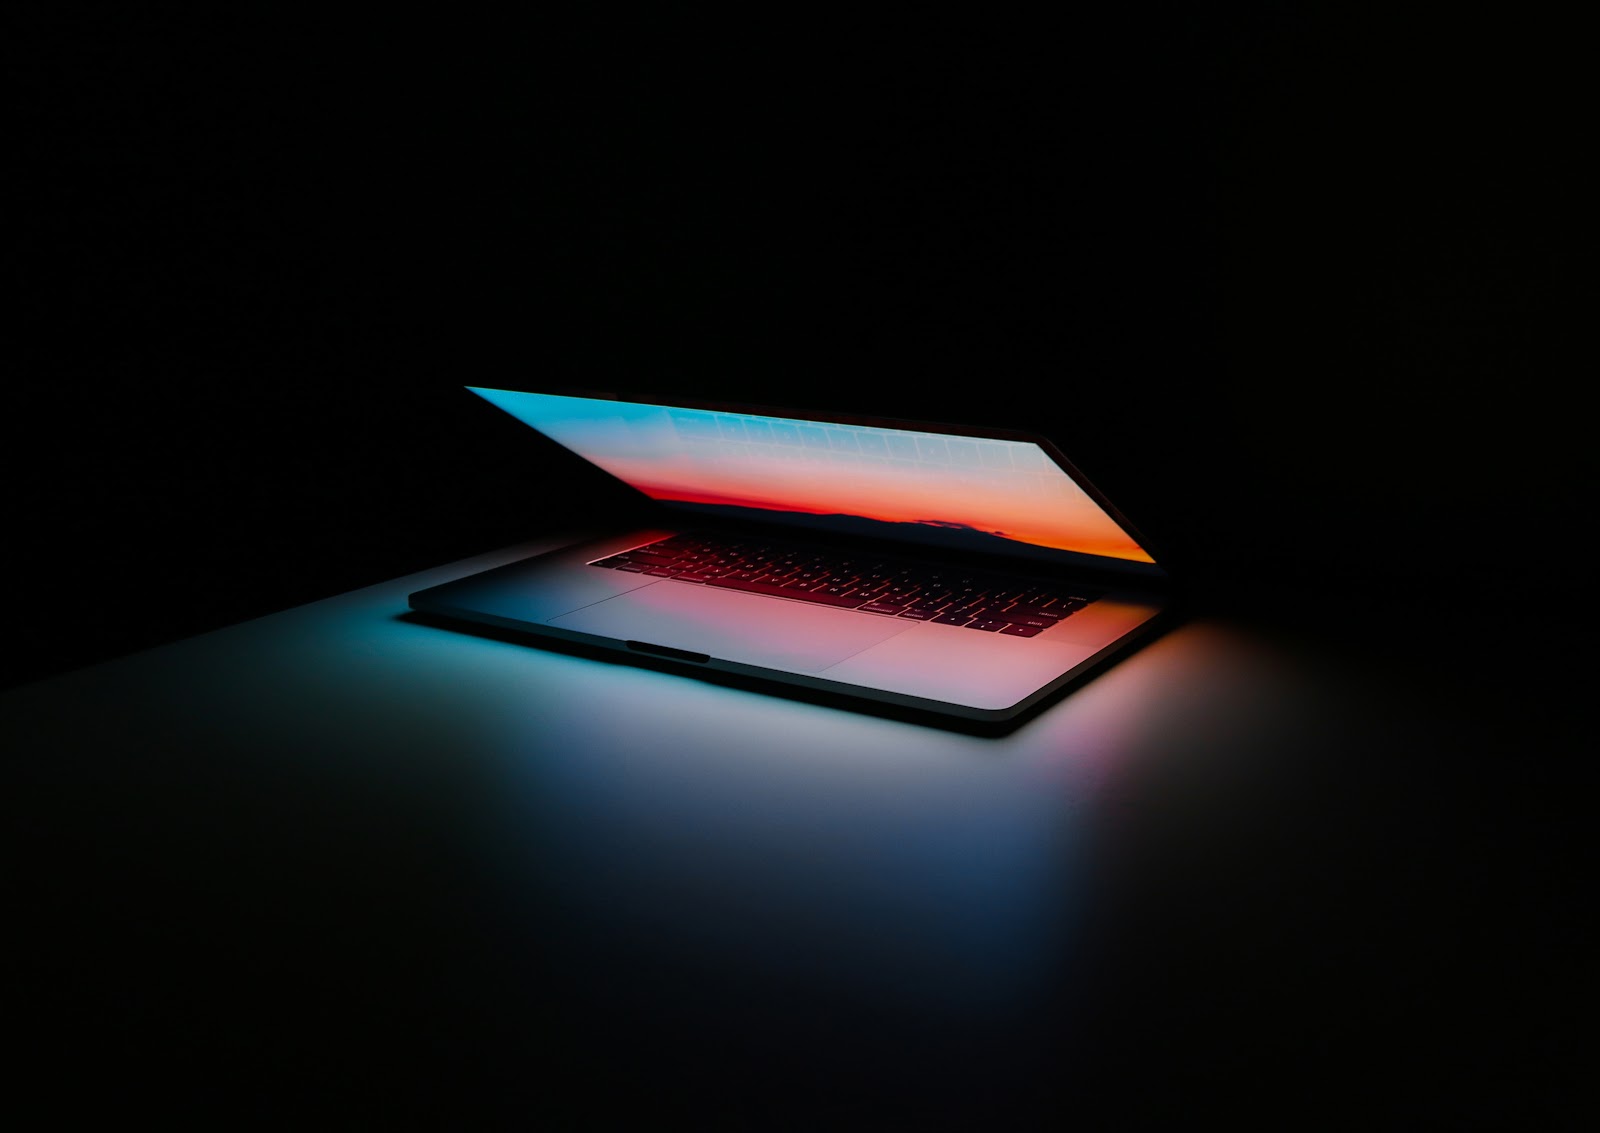  Laptop in a dark room.